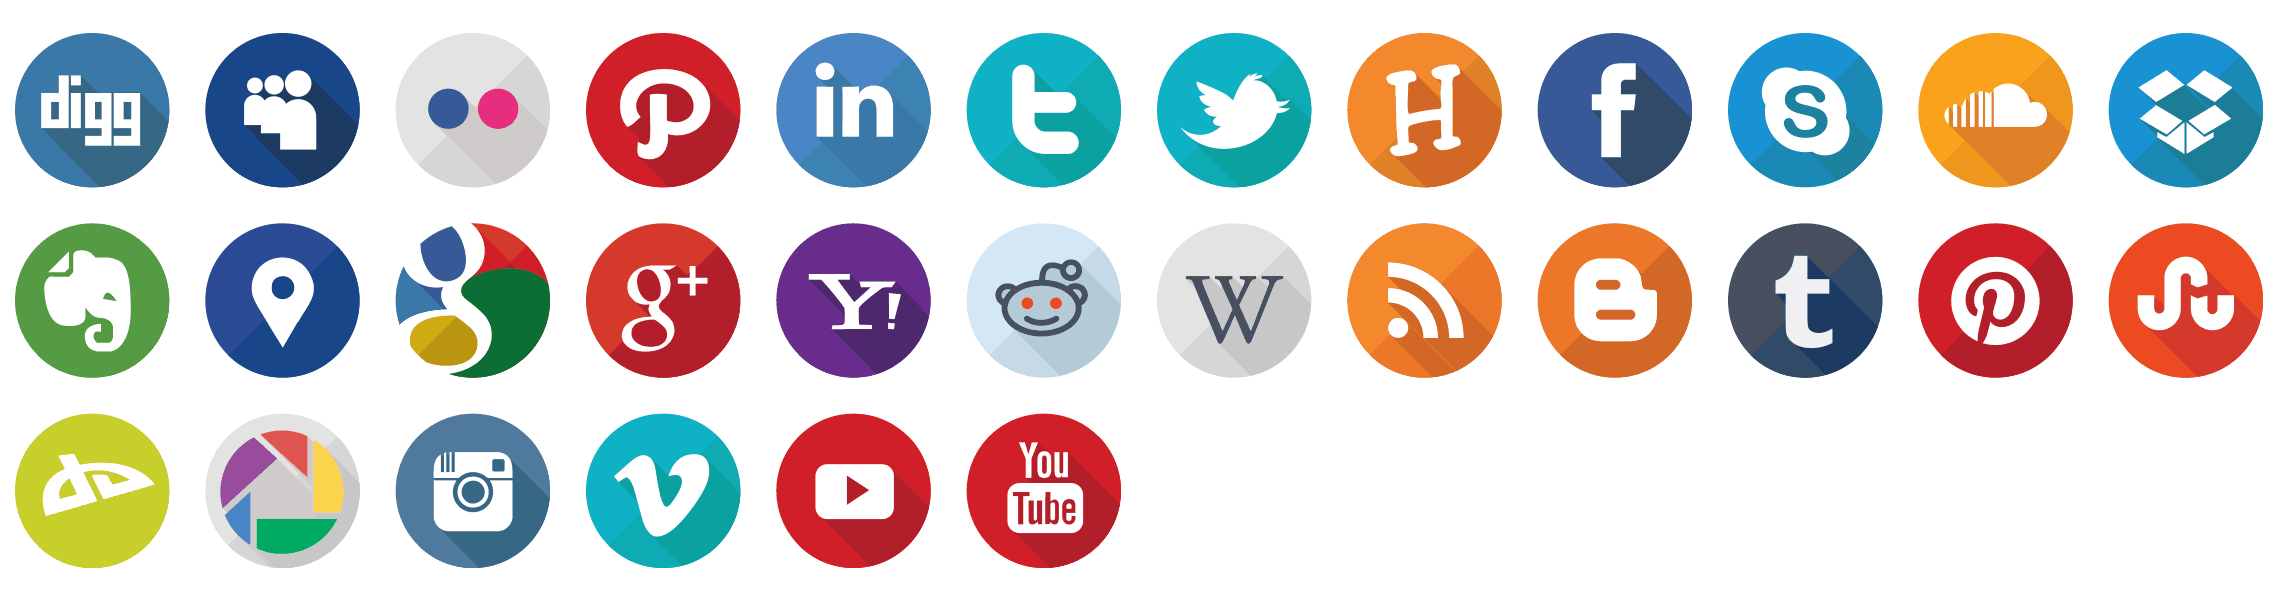 social-media-flat-icons-vol-1-preview